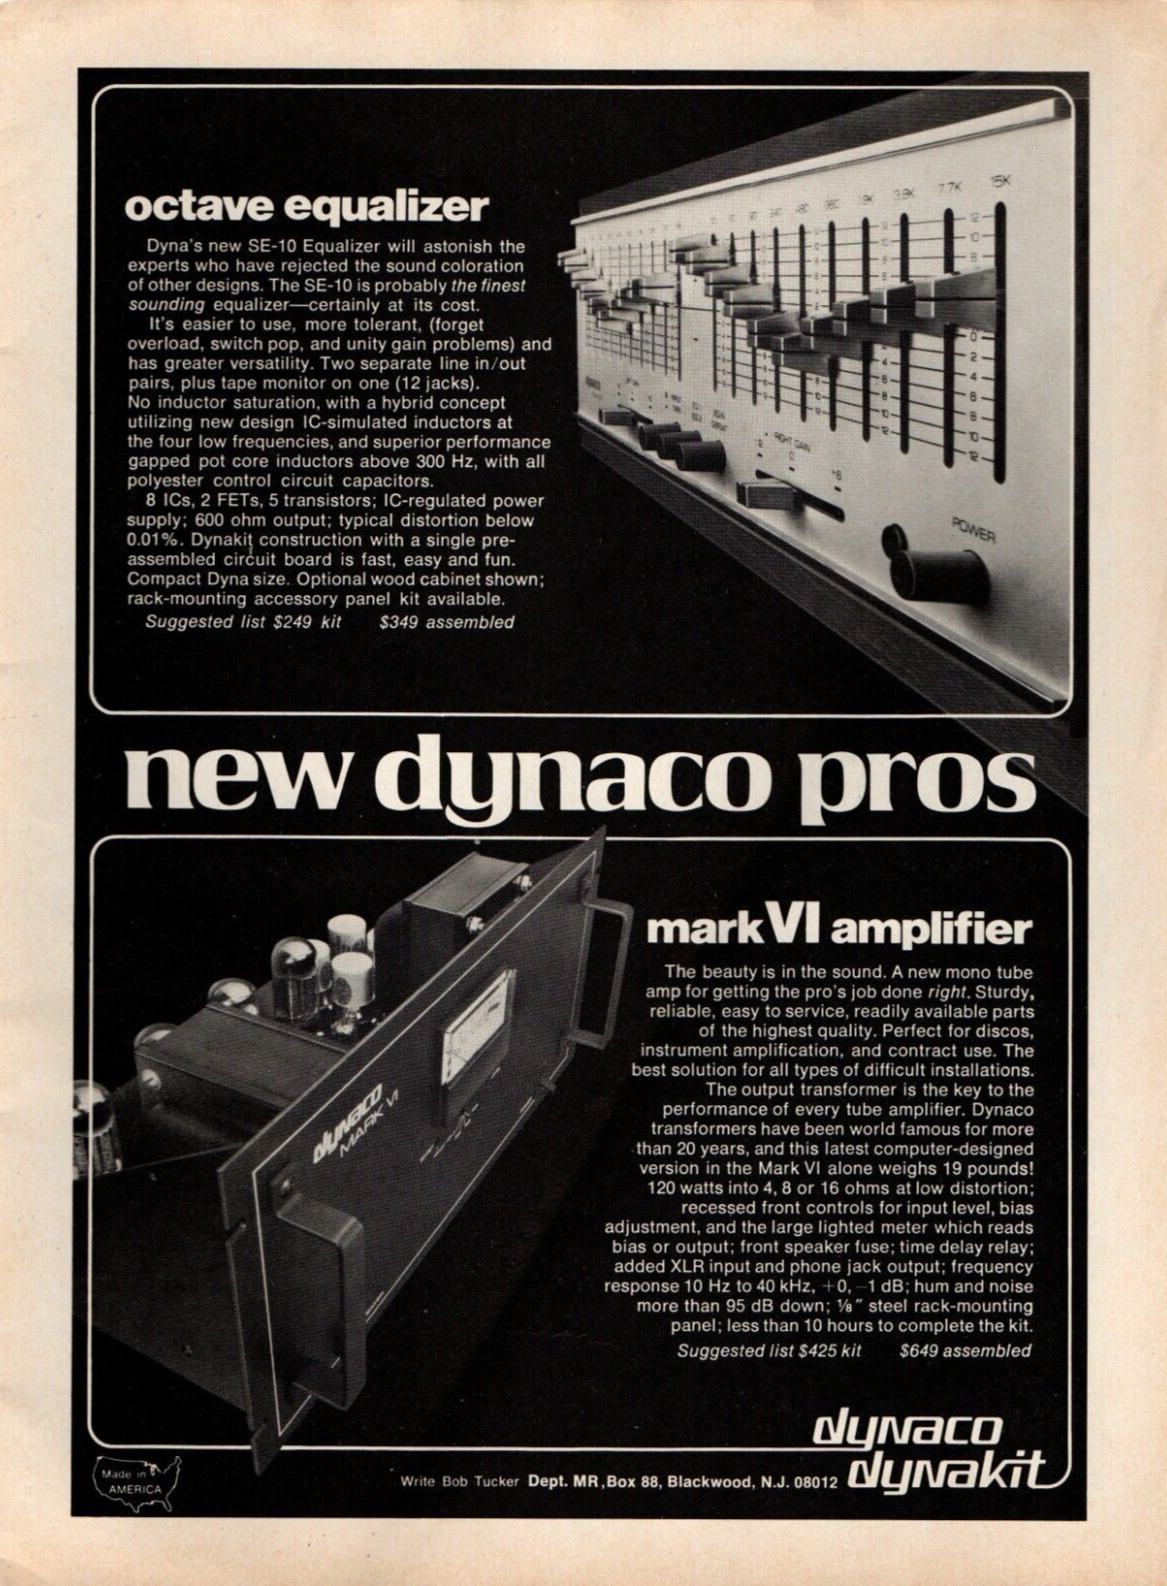 vtg 70s DYNACO DYNAKIT MAGAZINE PRINT AD Octave Equalizer Mark IV Amp Pinup Page